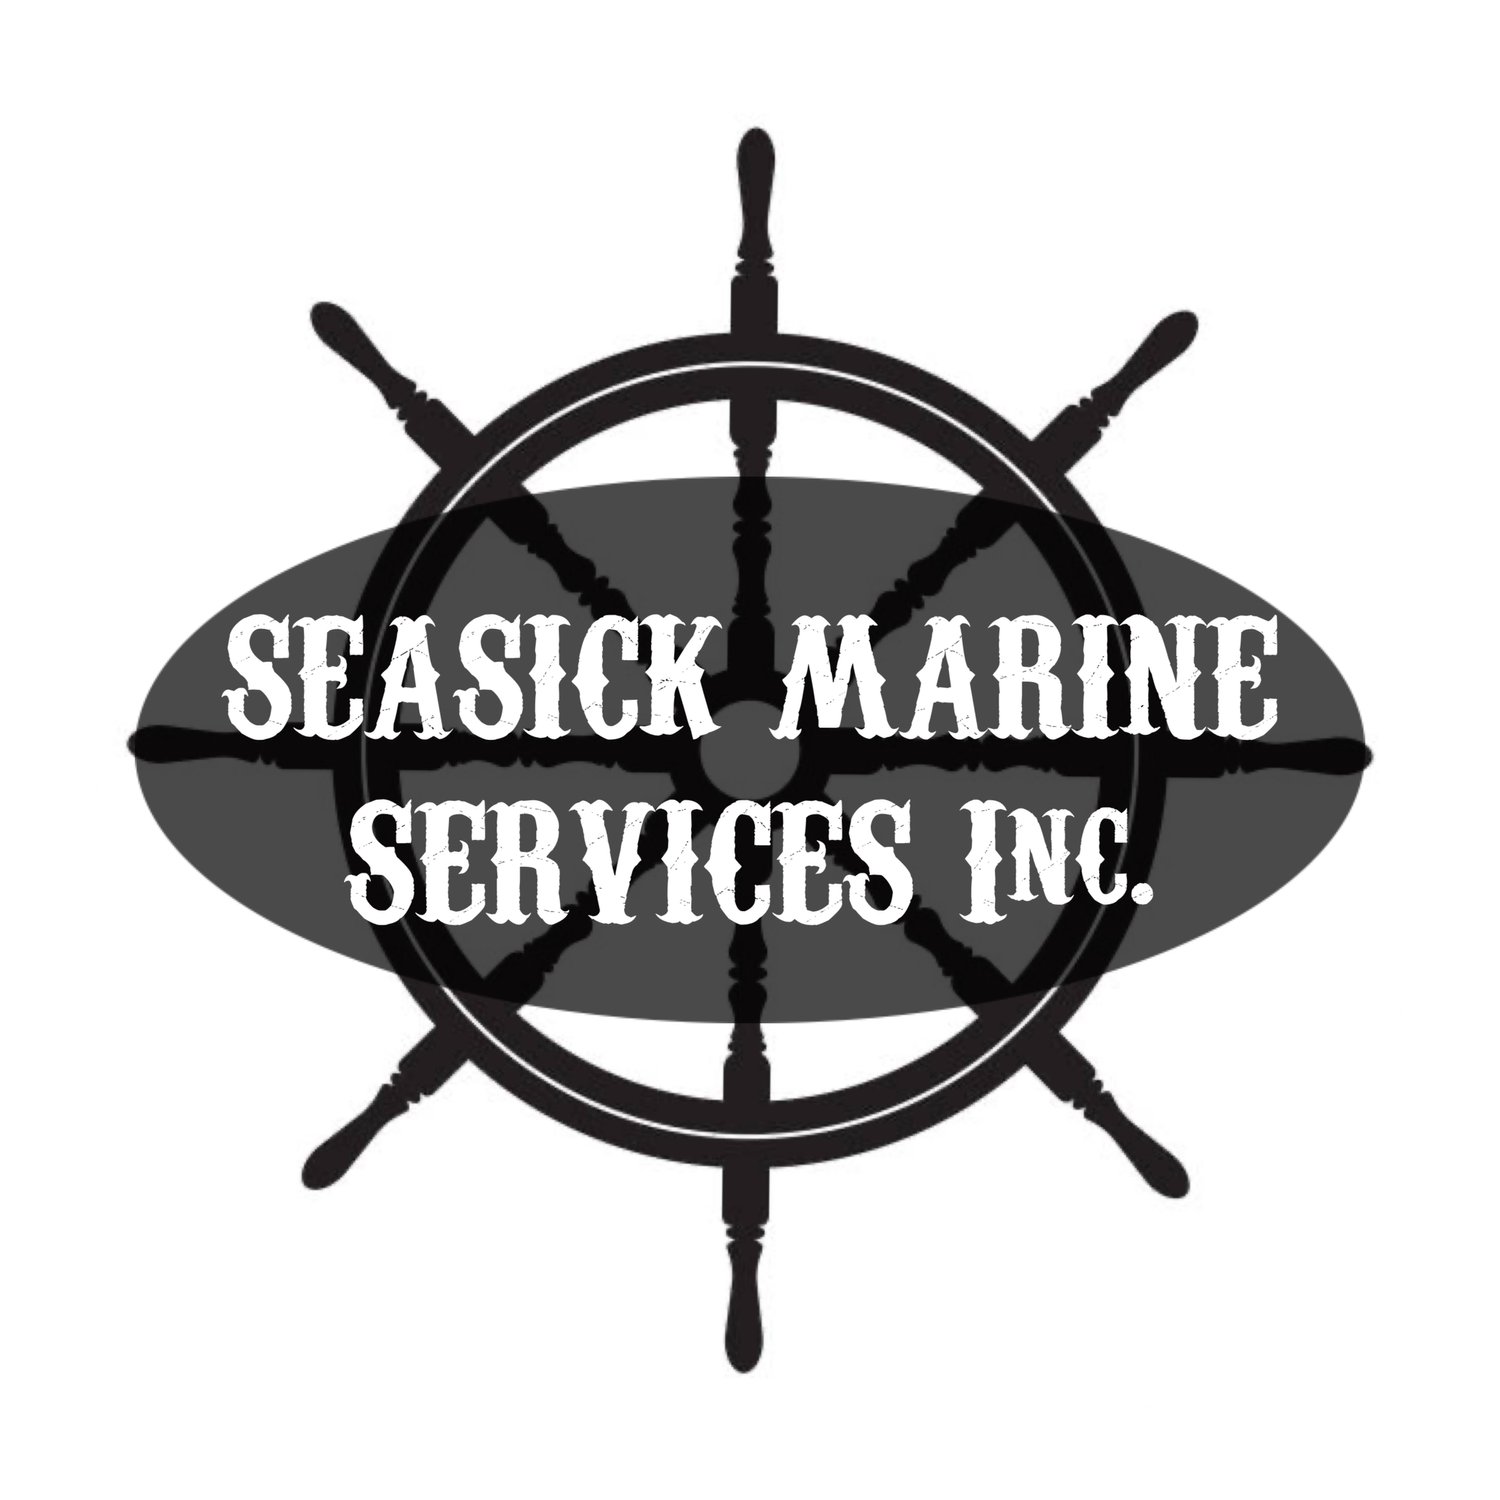 Seasick Marine Services Inc